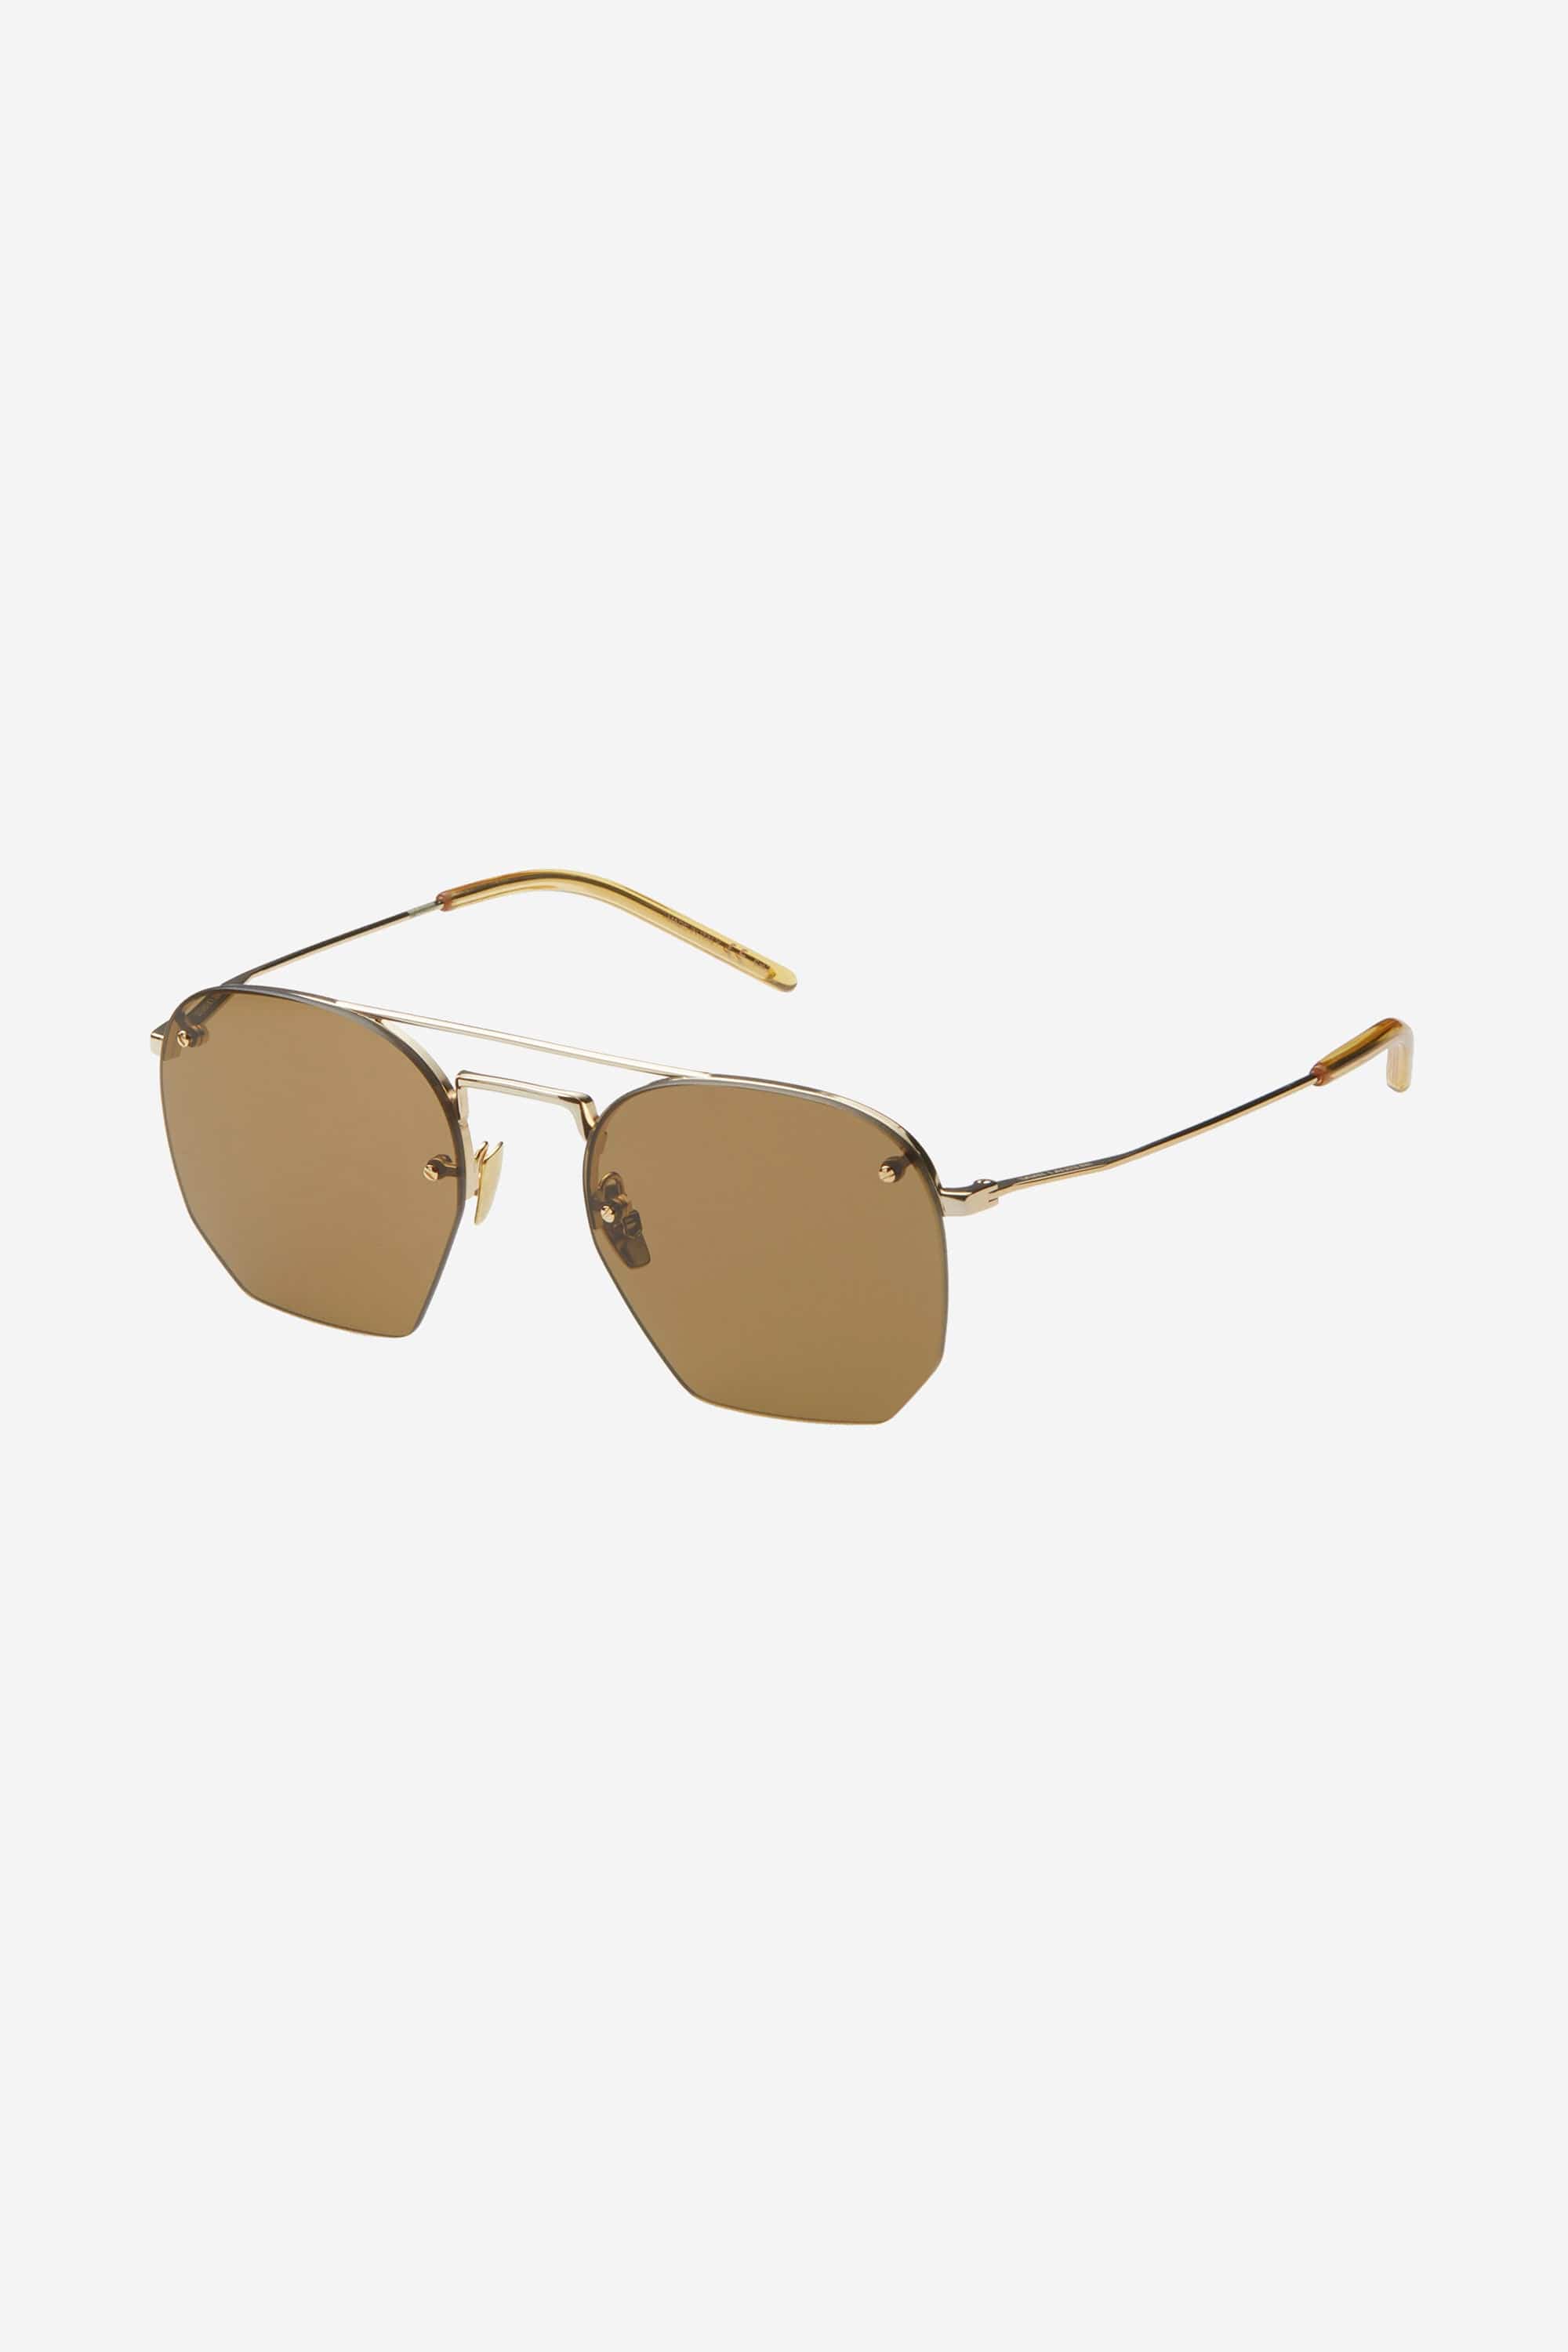 Saint Laurent rimless metal sytle gold brown sunglasses - Eyewear Club